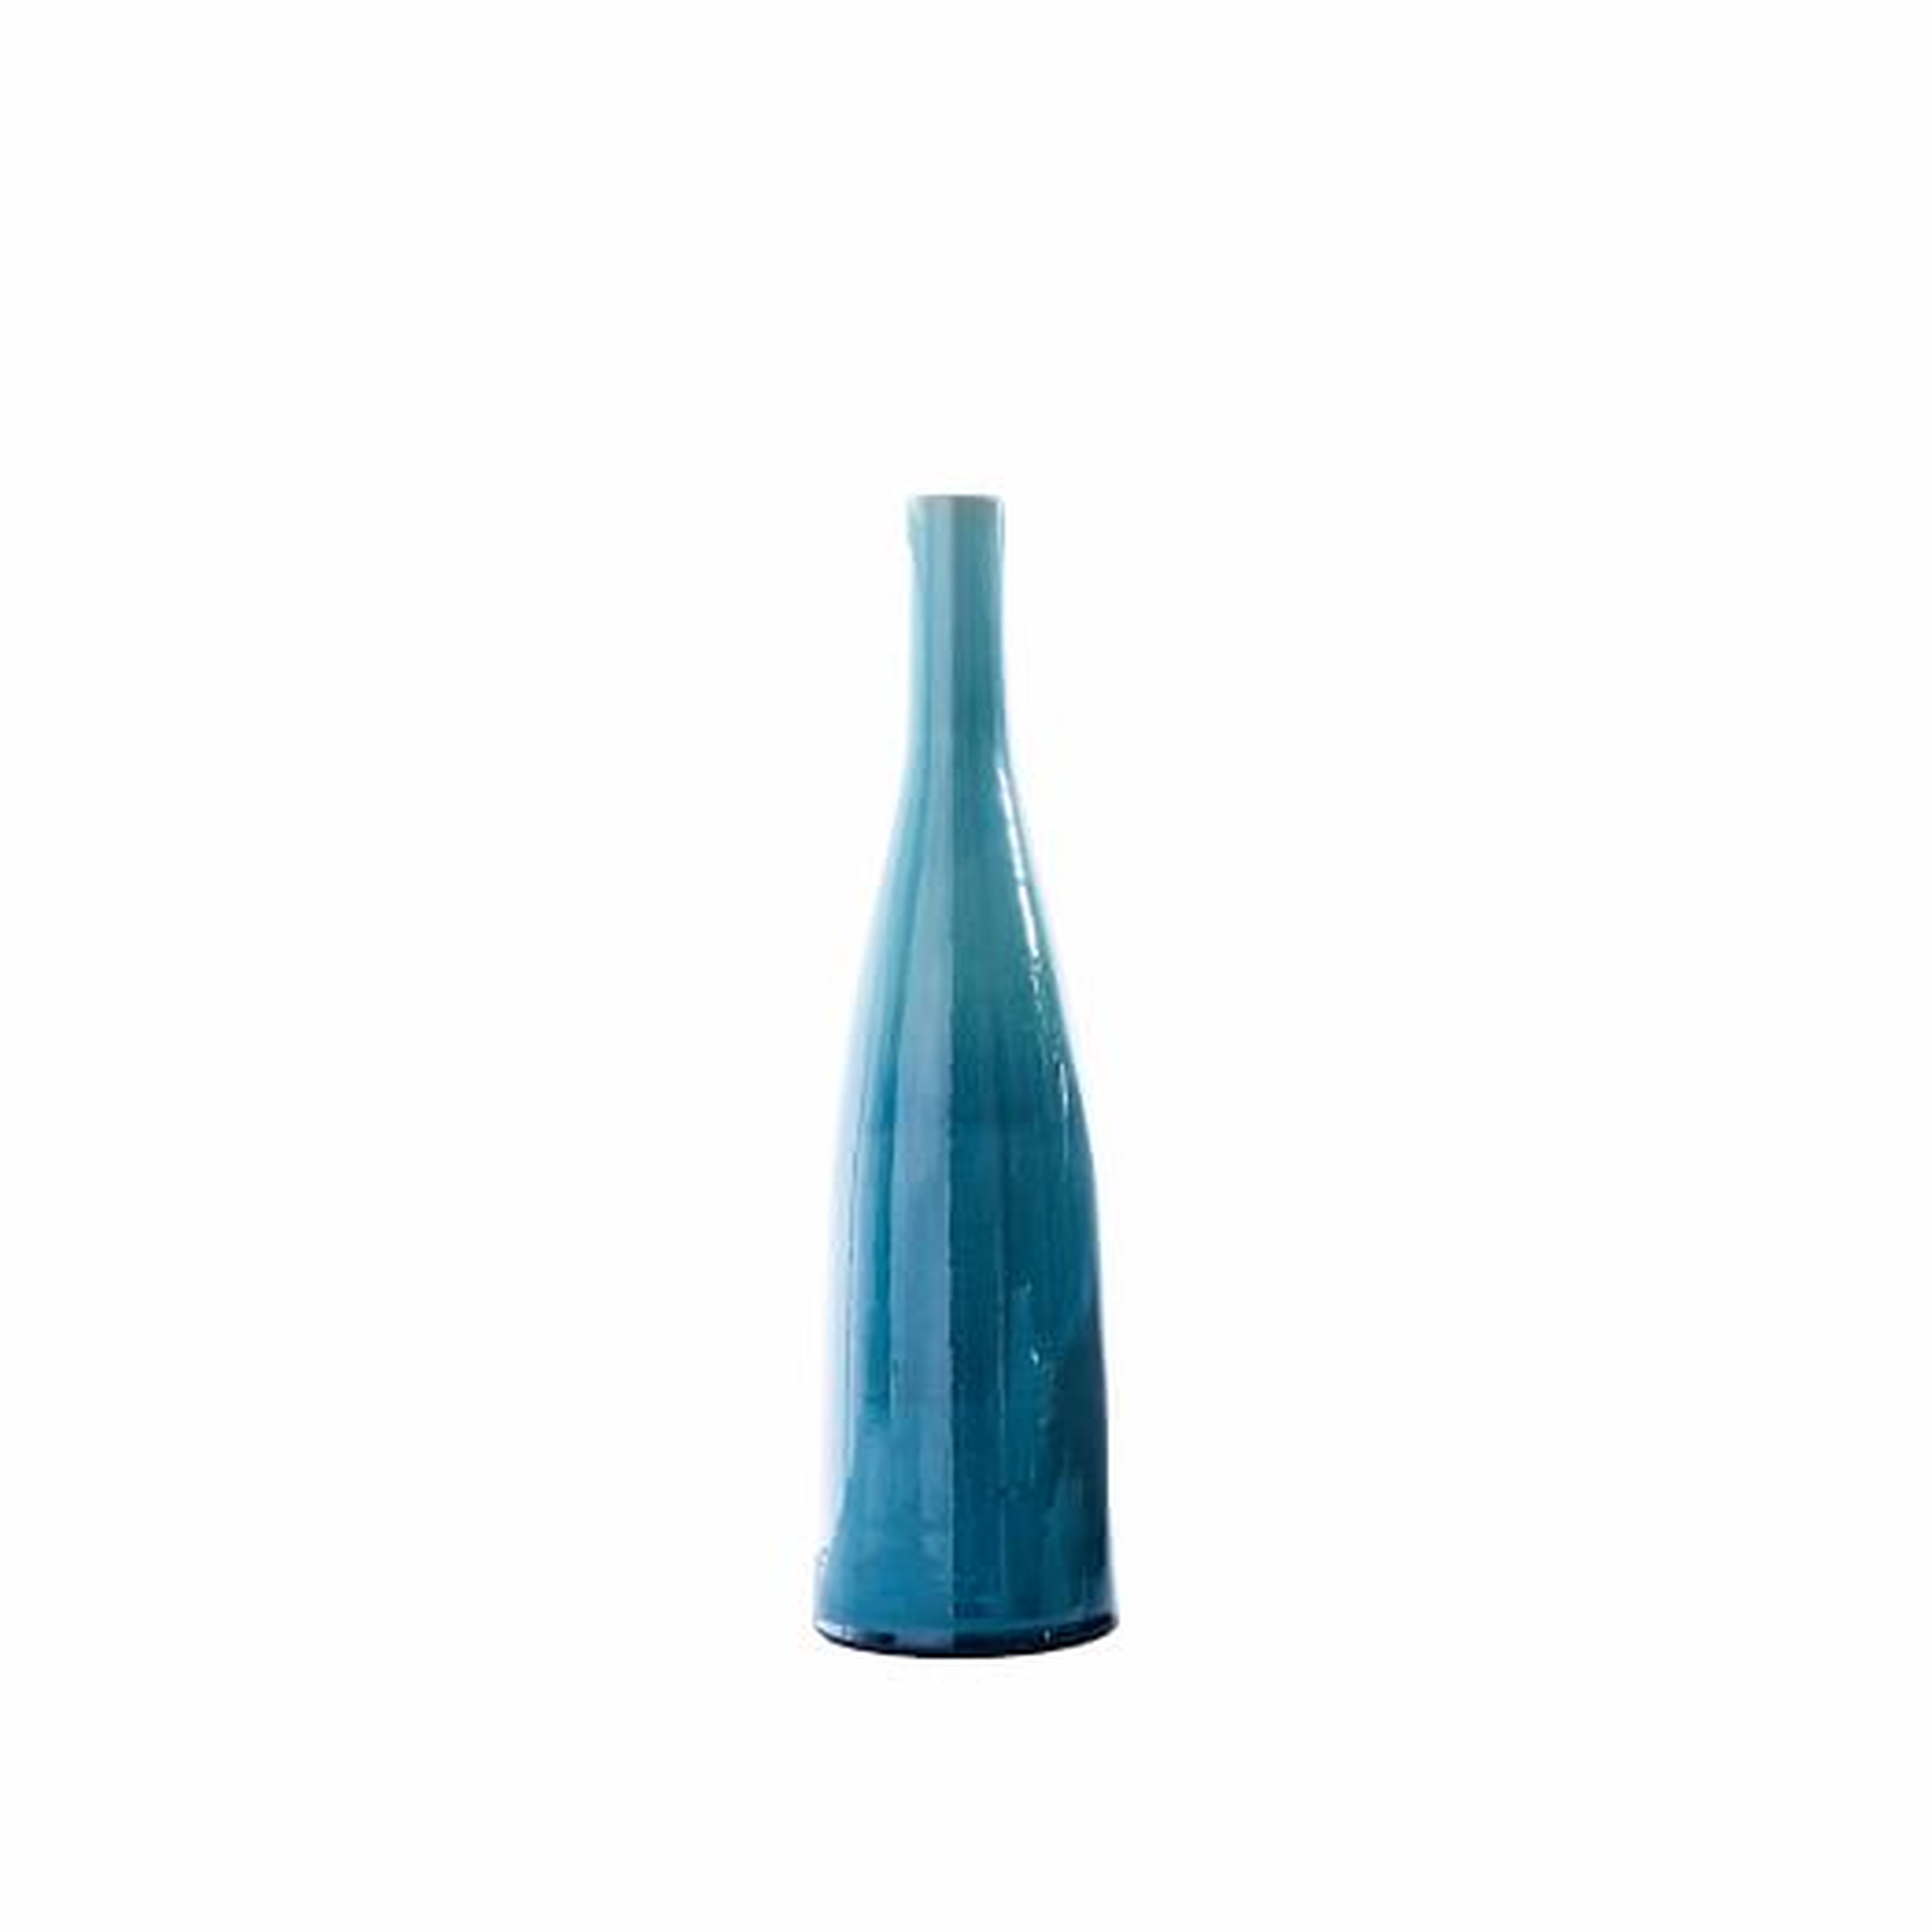 Reactive Glaze Vases - Turquoise - Medium - West Elm